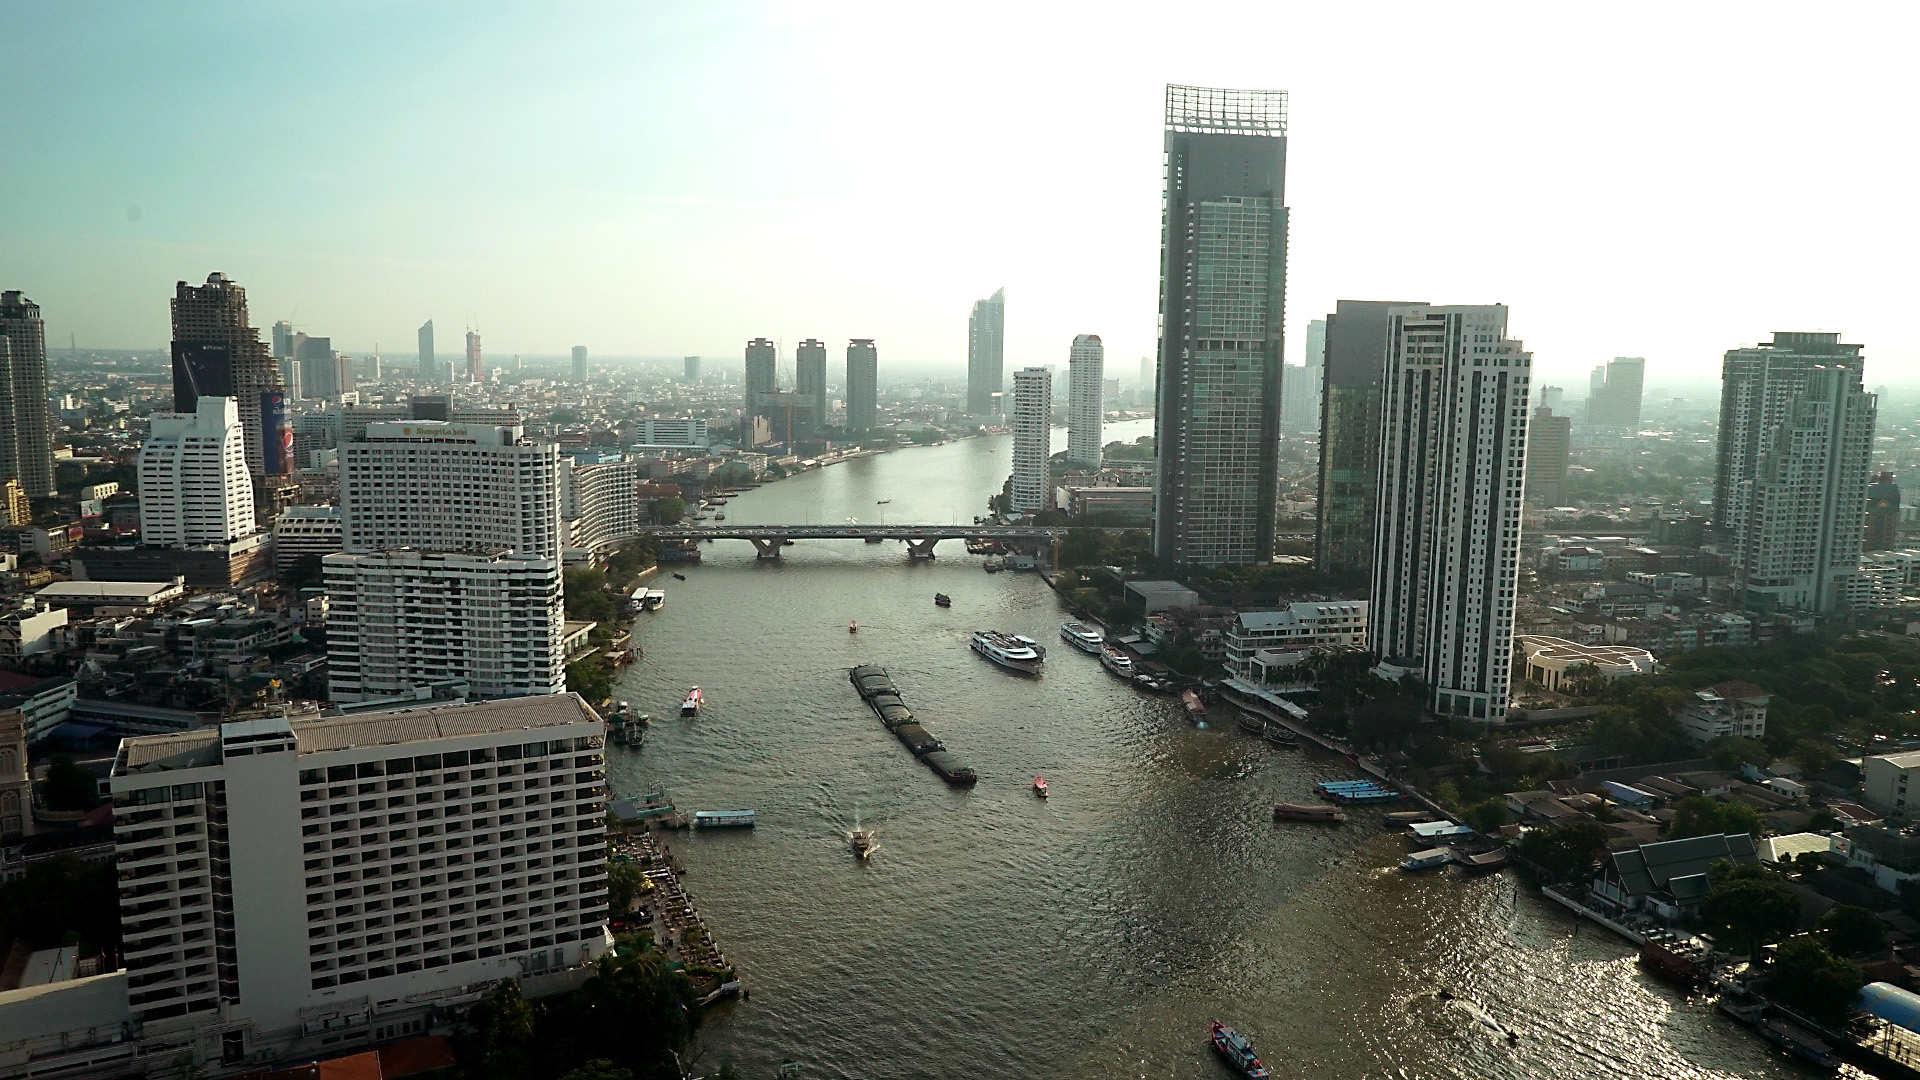 The Life-Sized City - E4 - Bangkok